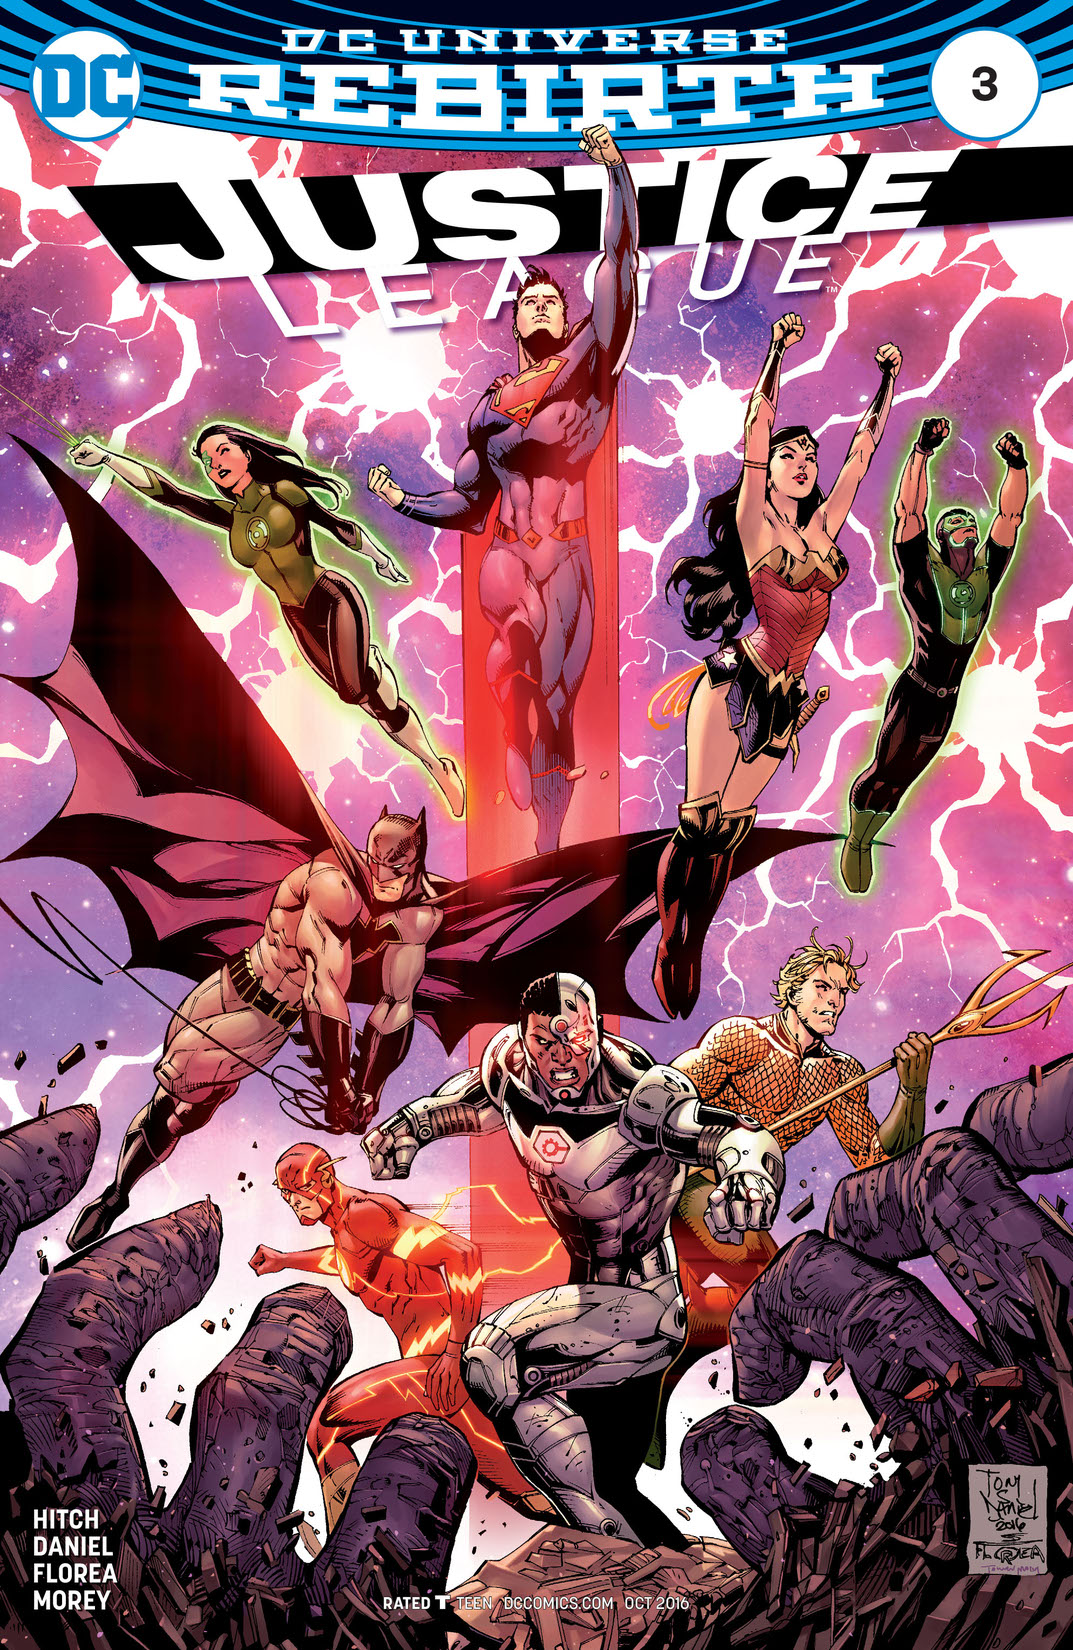 Justice League (2016-) #3 preview images